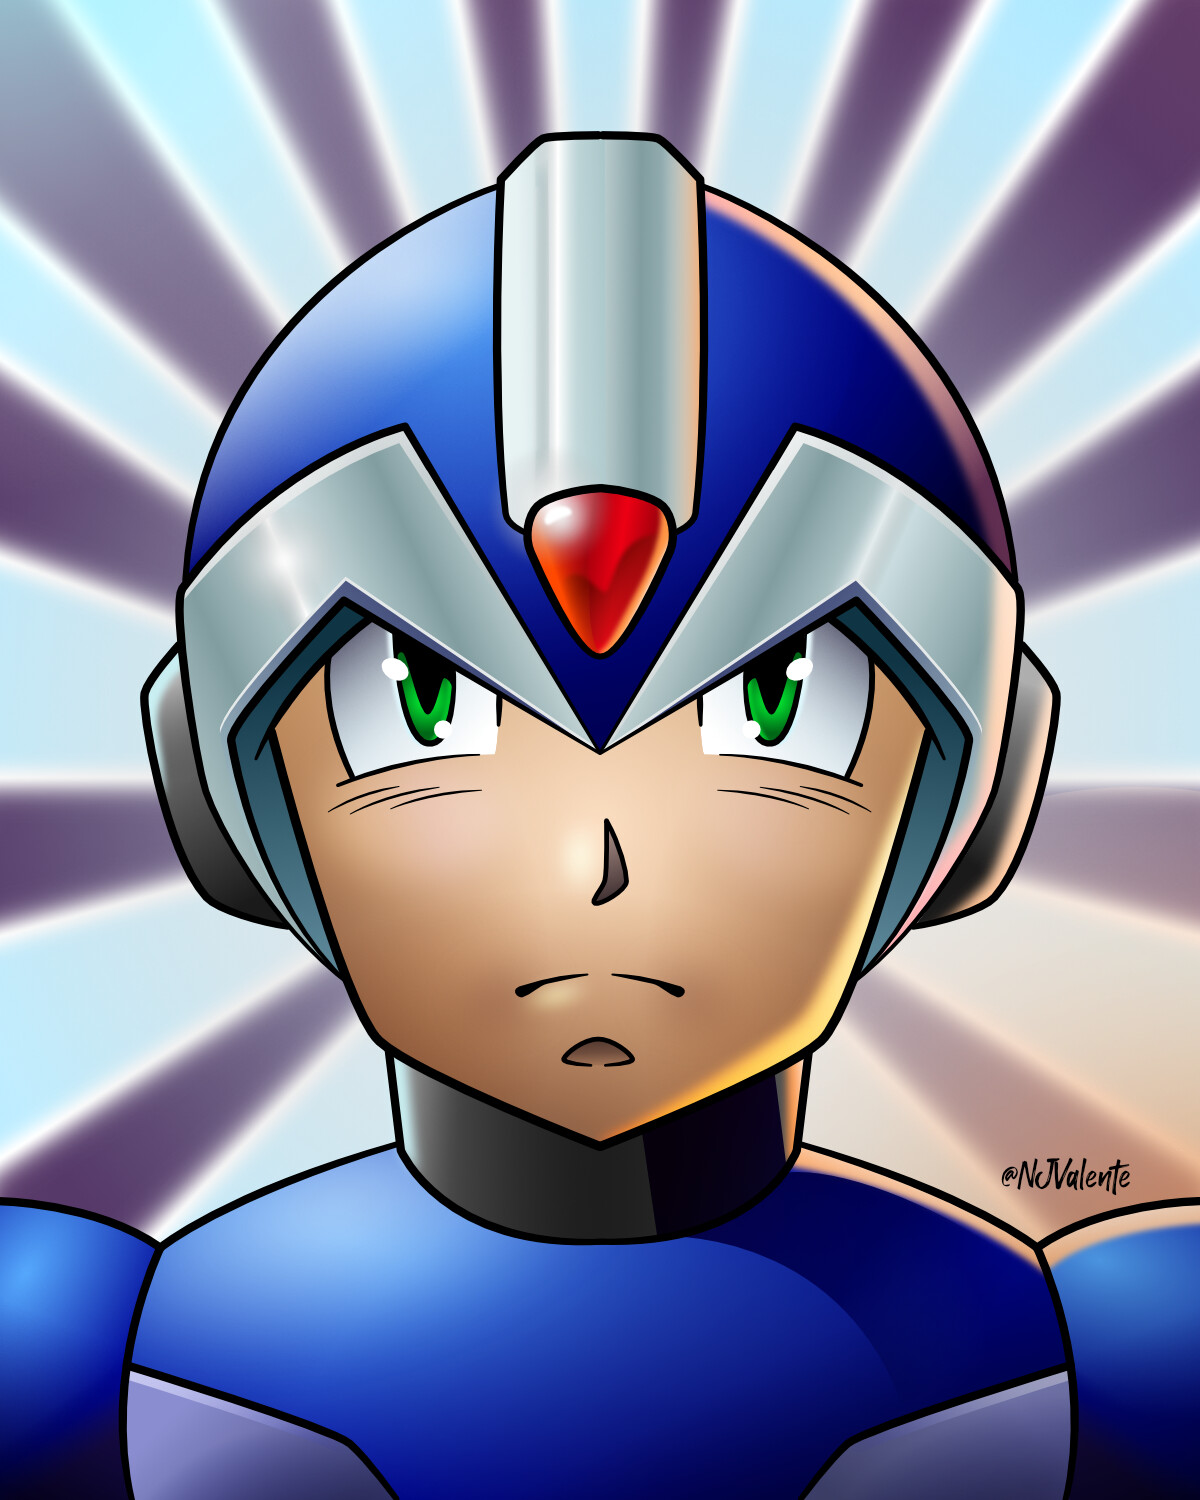 Mega Man X vector art in Affinity Designer.